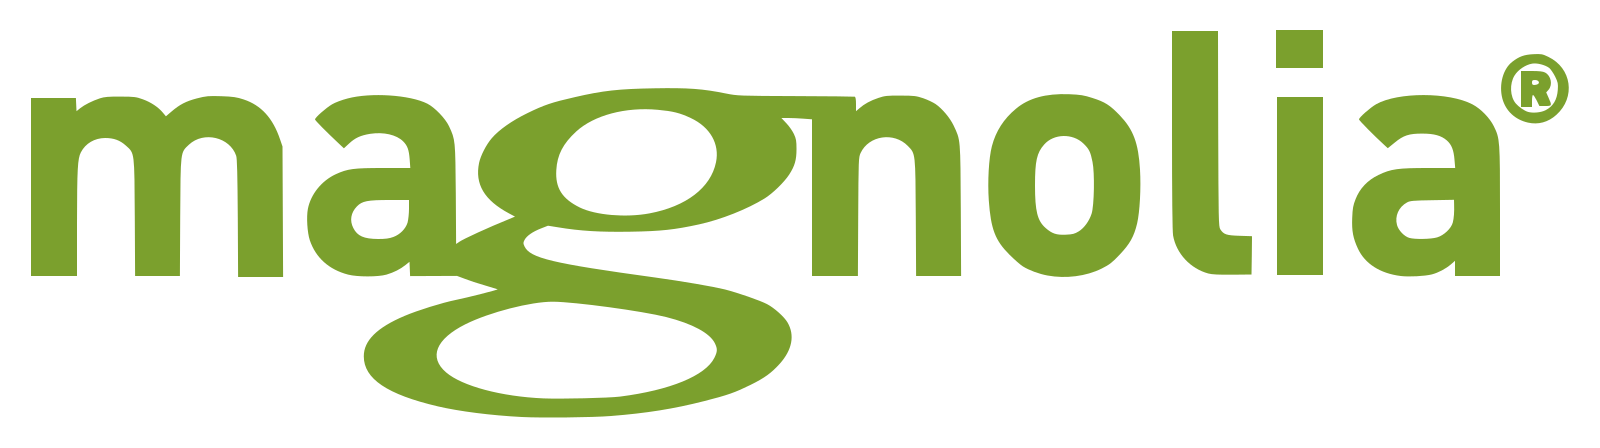 File:Magnolia (CMS) logo.svg - Wikimedia Commons